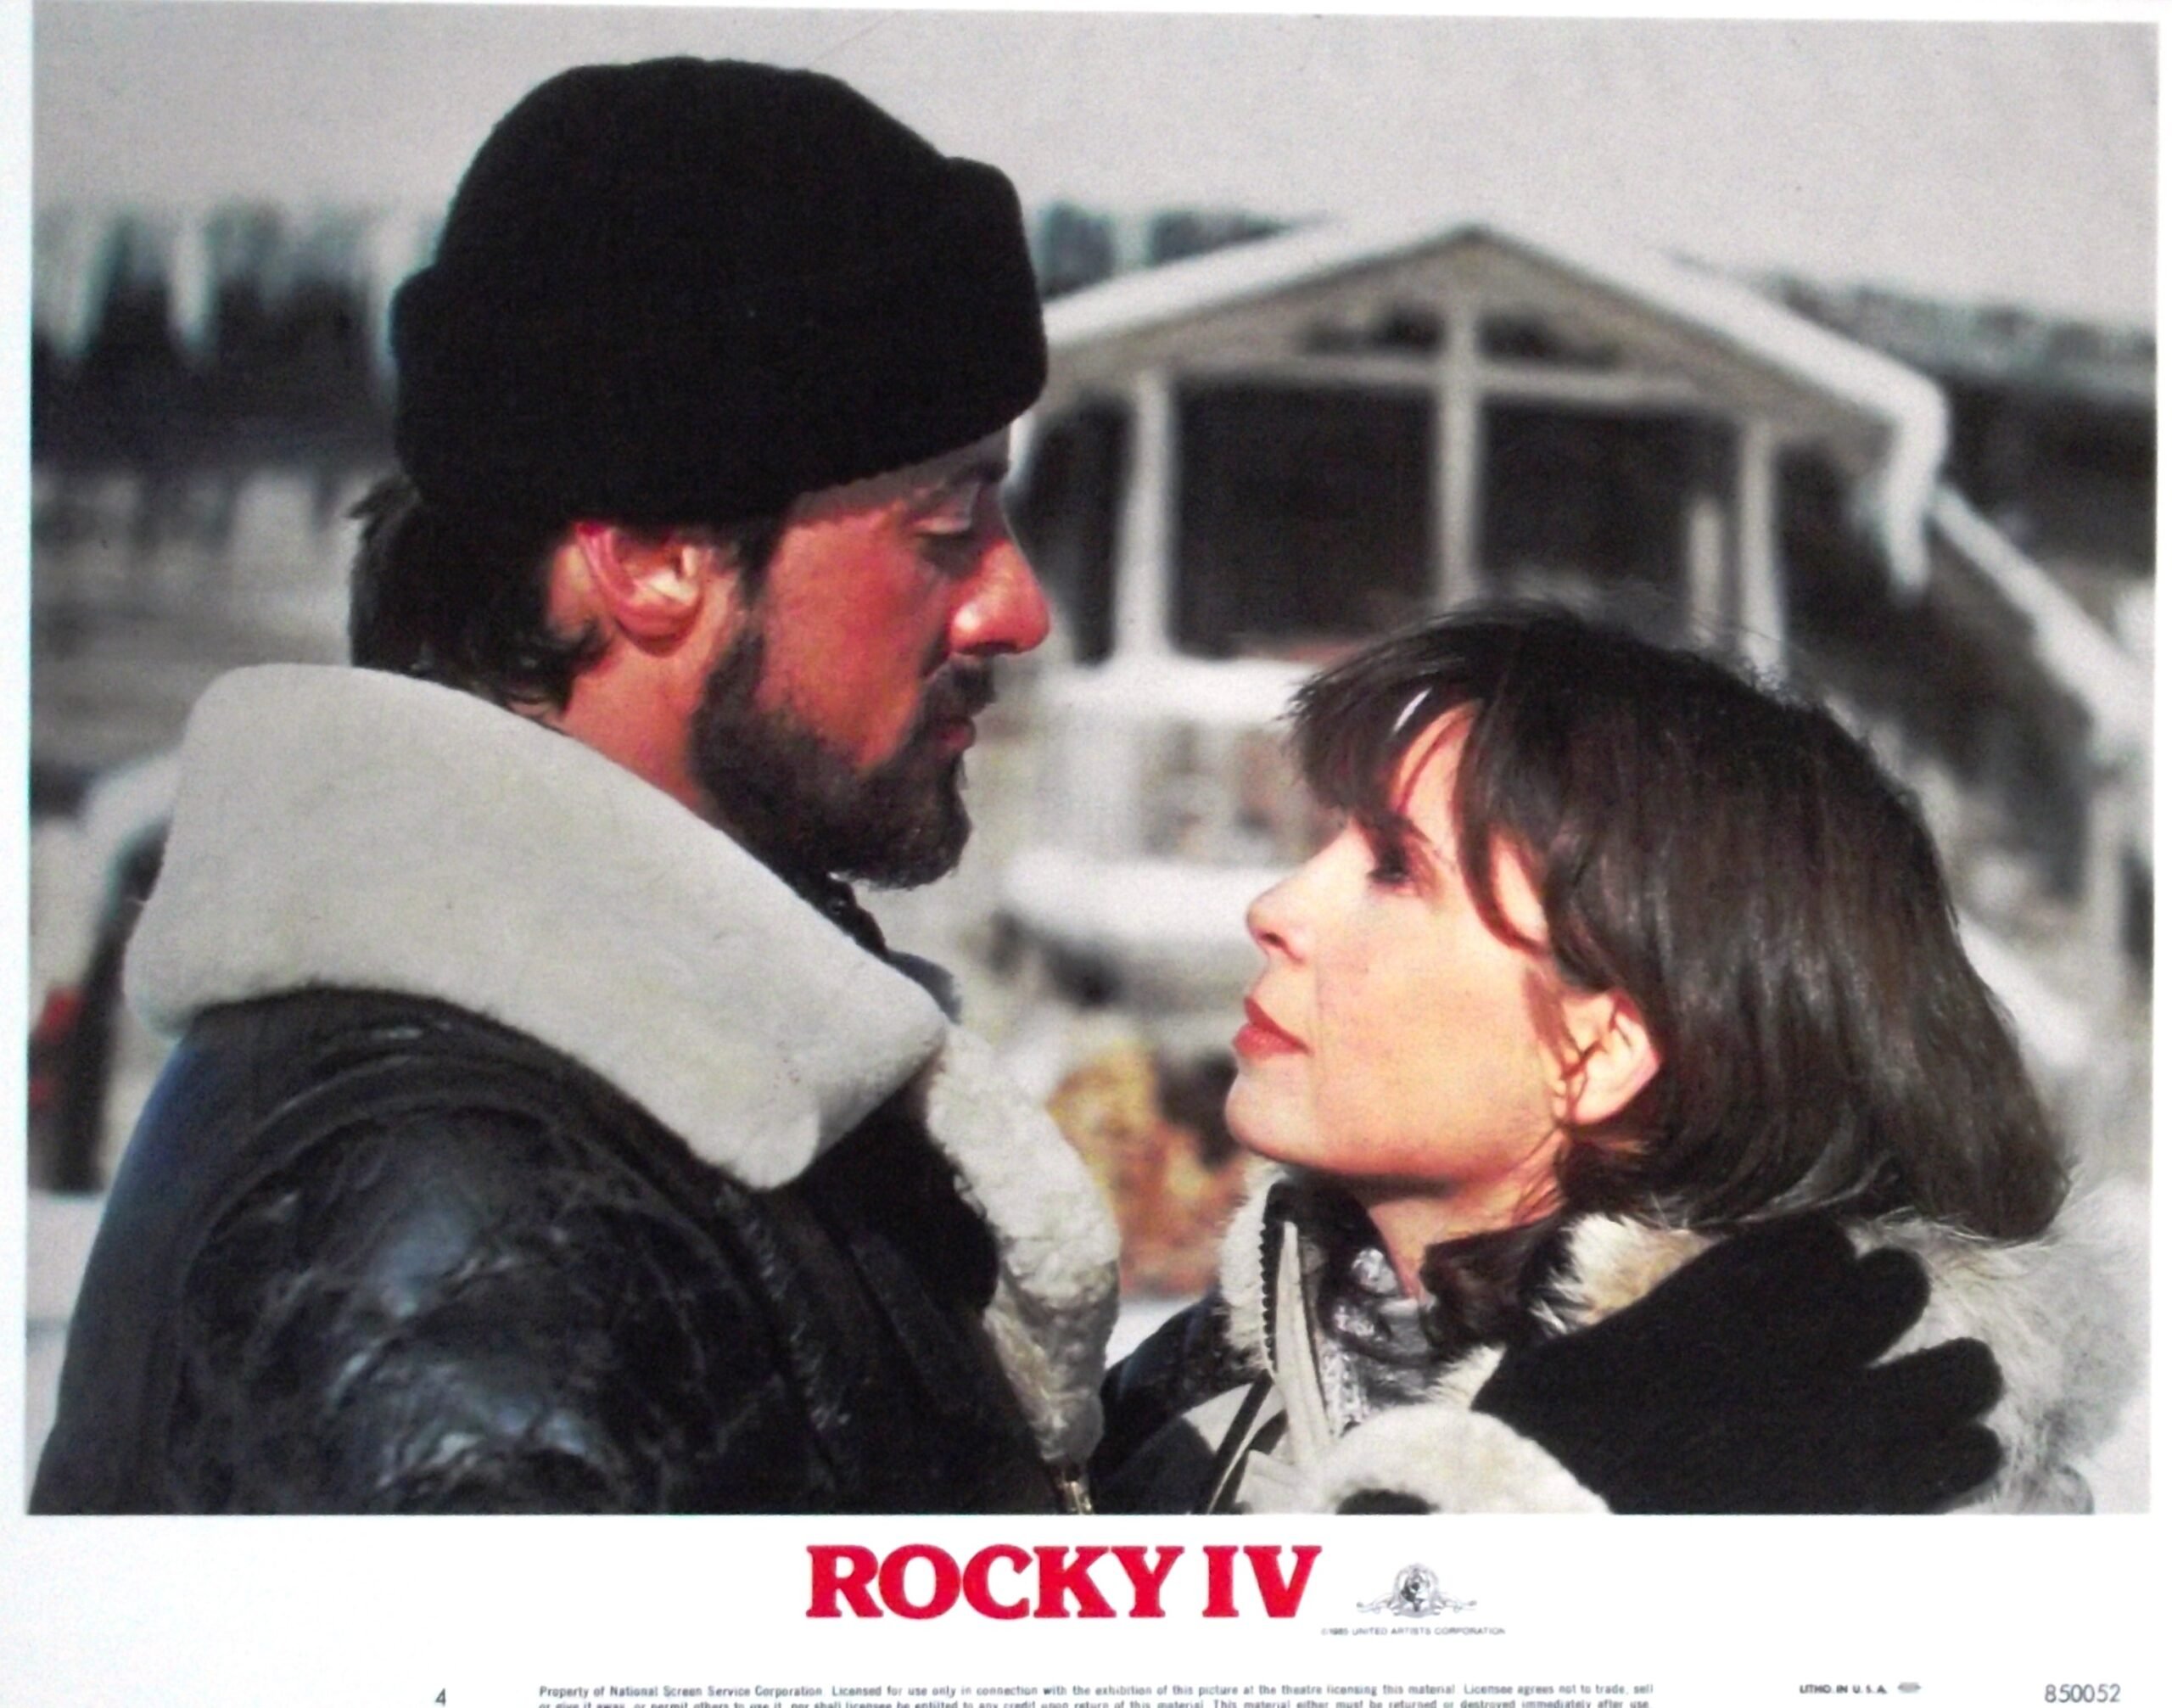 Vintage original US lobby card poster for Rocky IV film starring Sylvester Stallone.